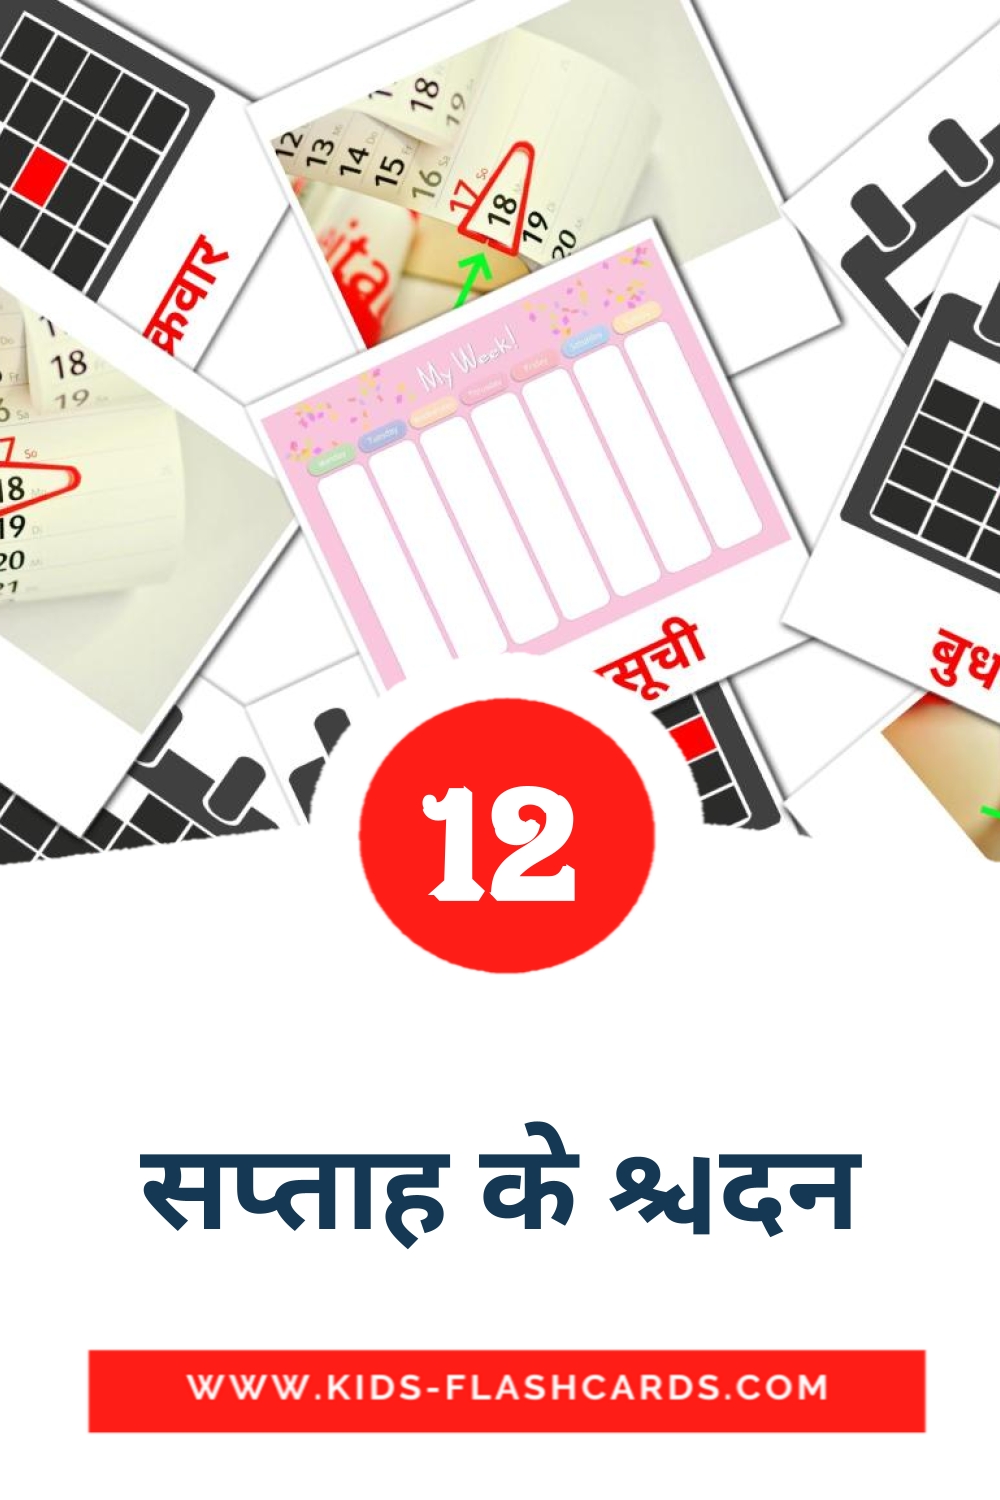 12 carte illustrate di सप्ताह के दिन per la scuola materna in hindi